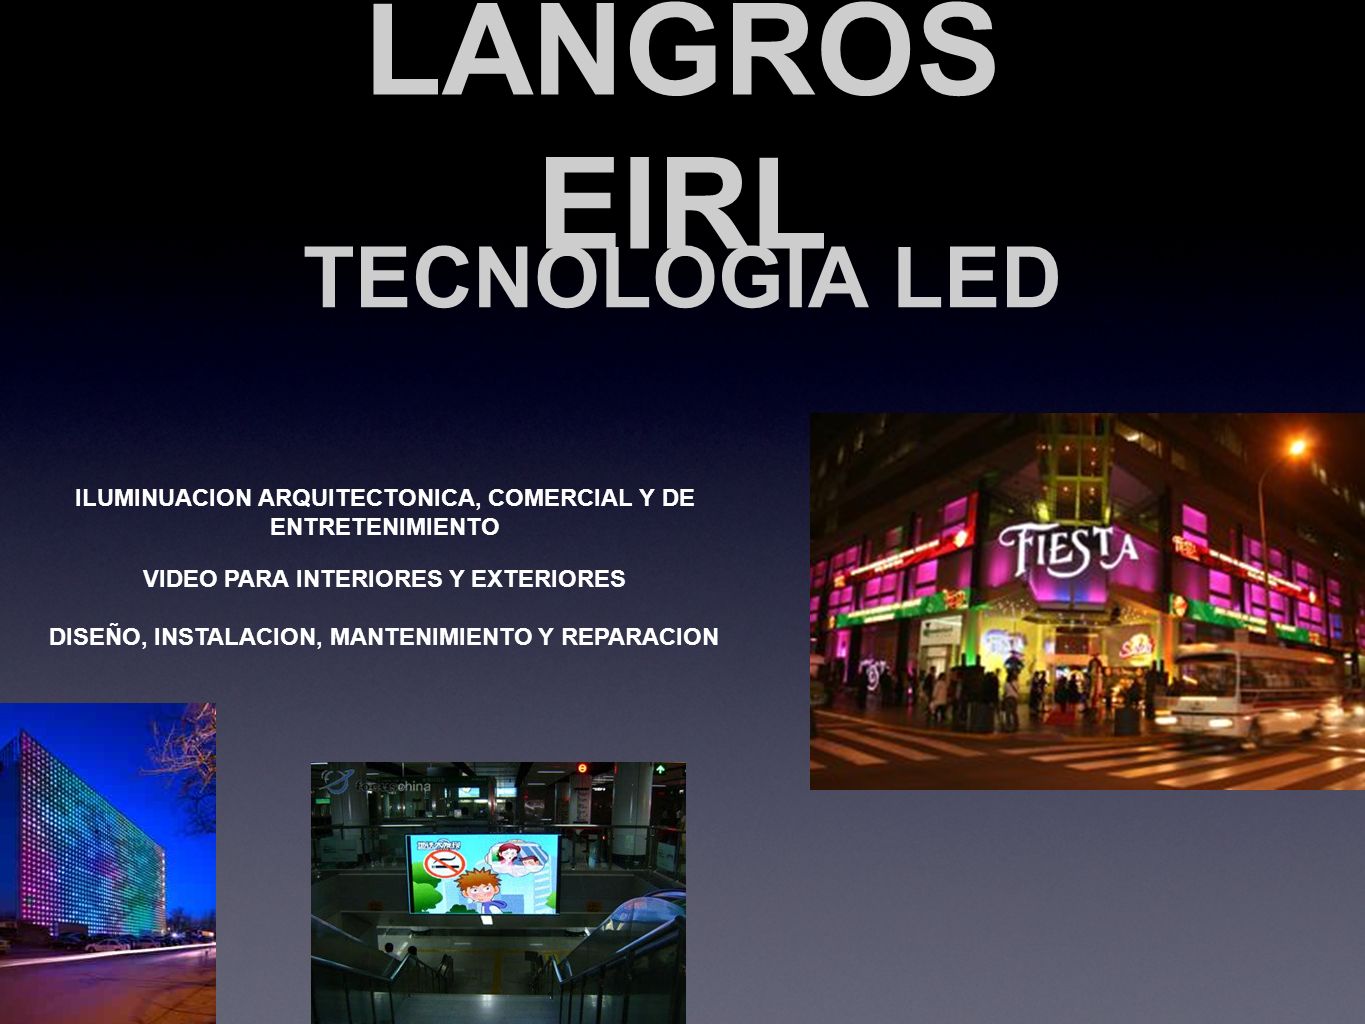 LANGROS EIRL TECNOLOGIA LED